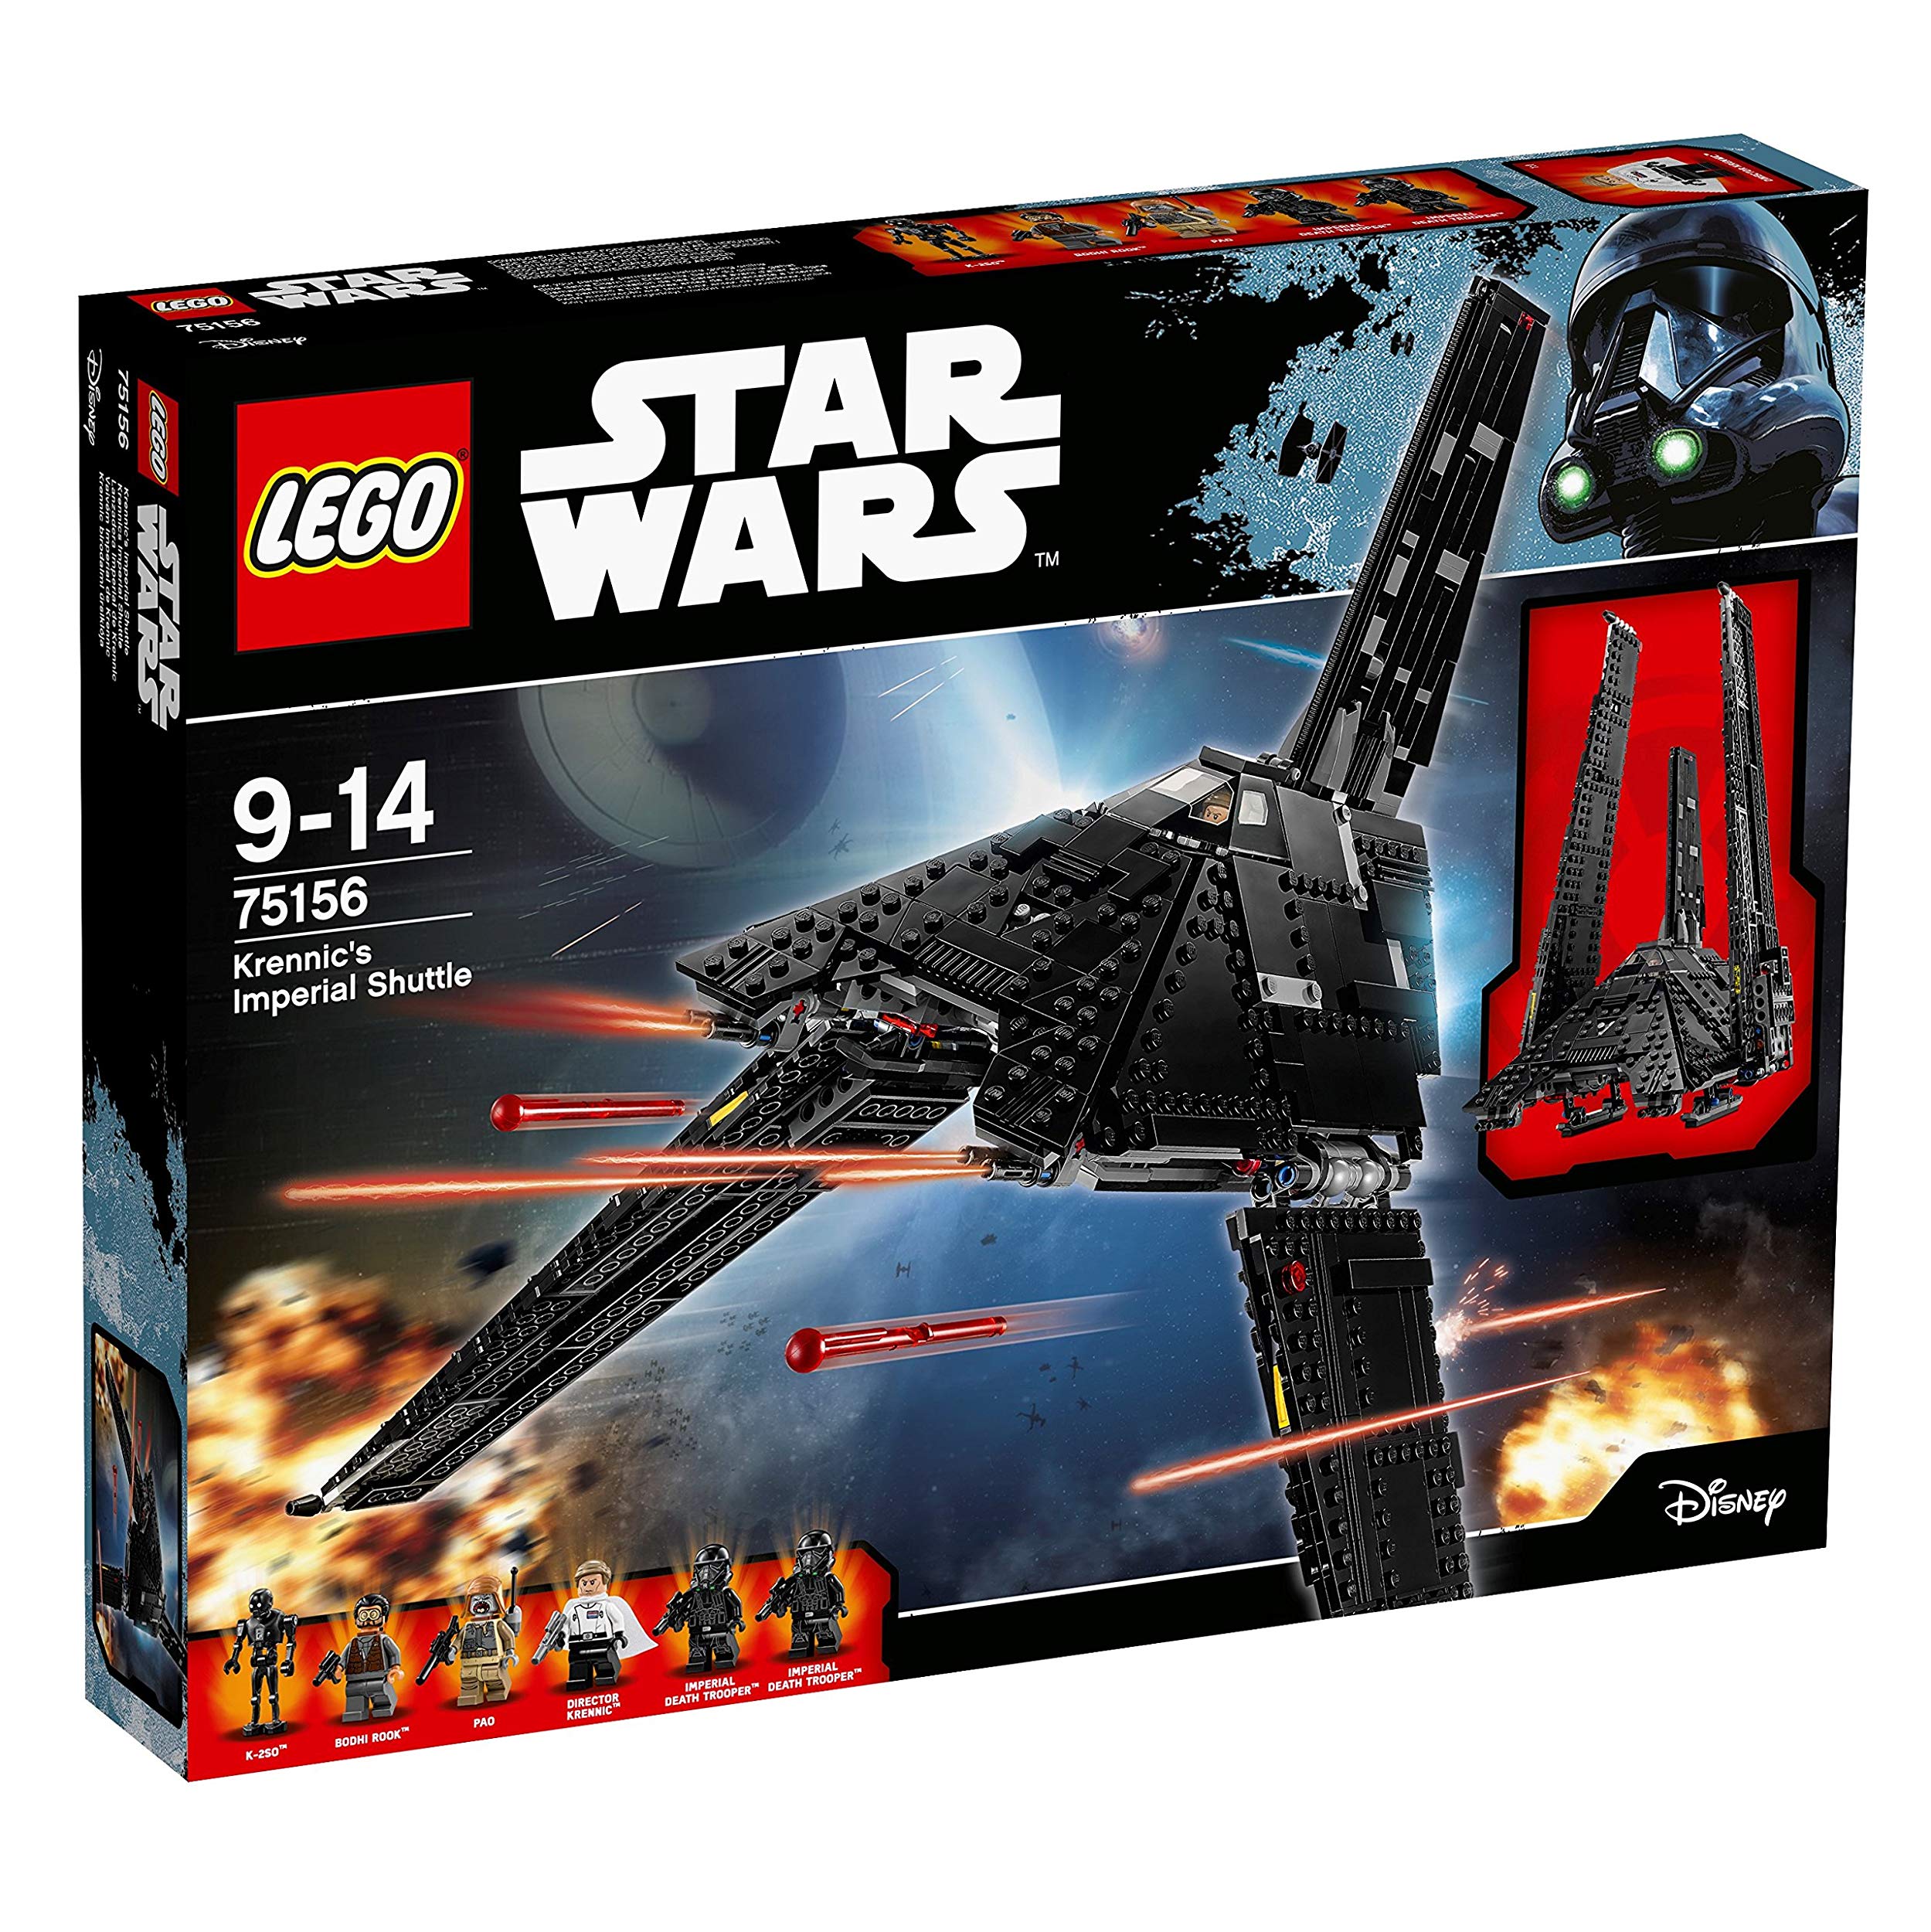 Lego Star Wars Toy Krennics Star Wars Imperial Shuttle